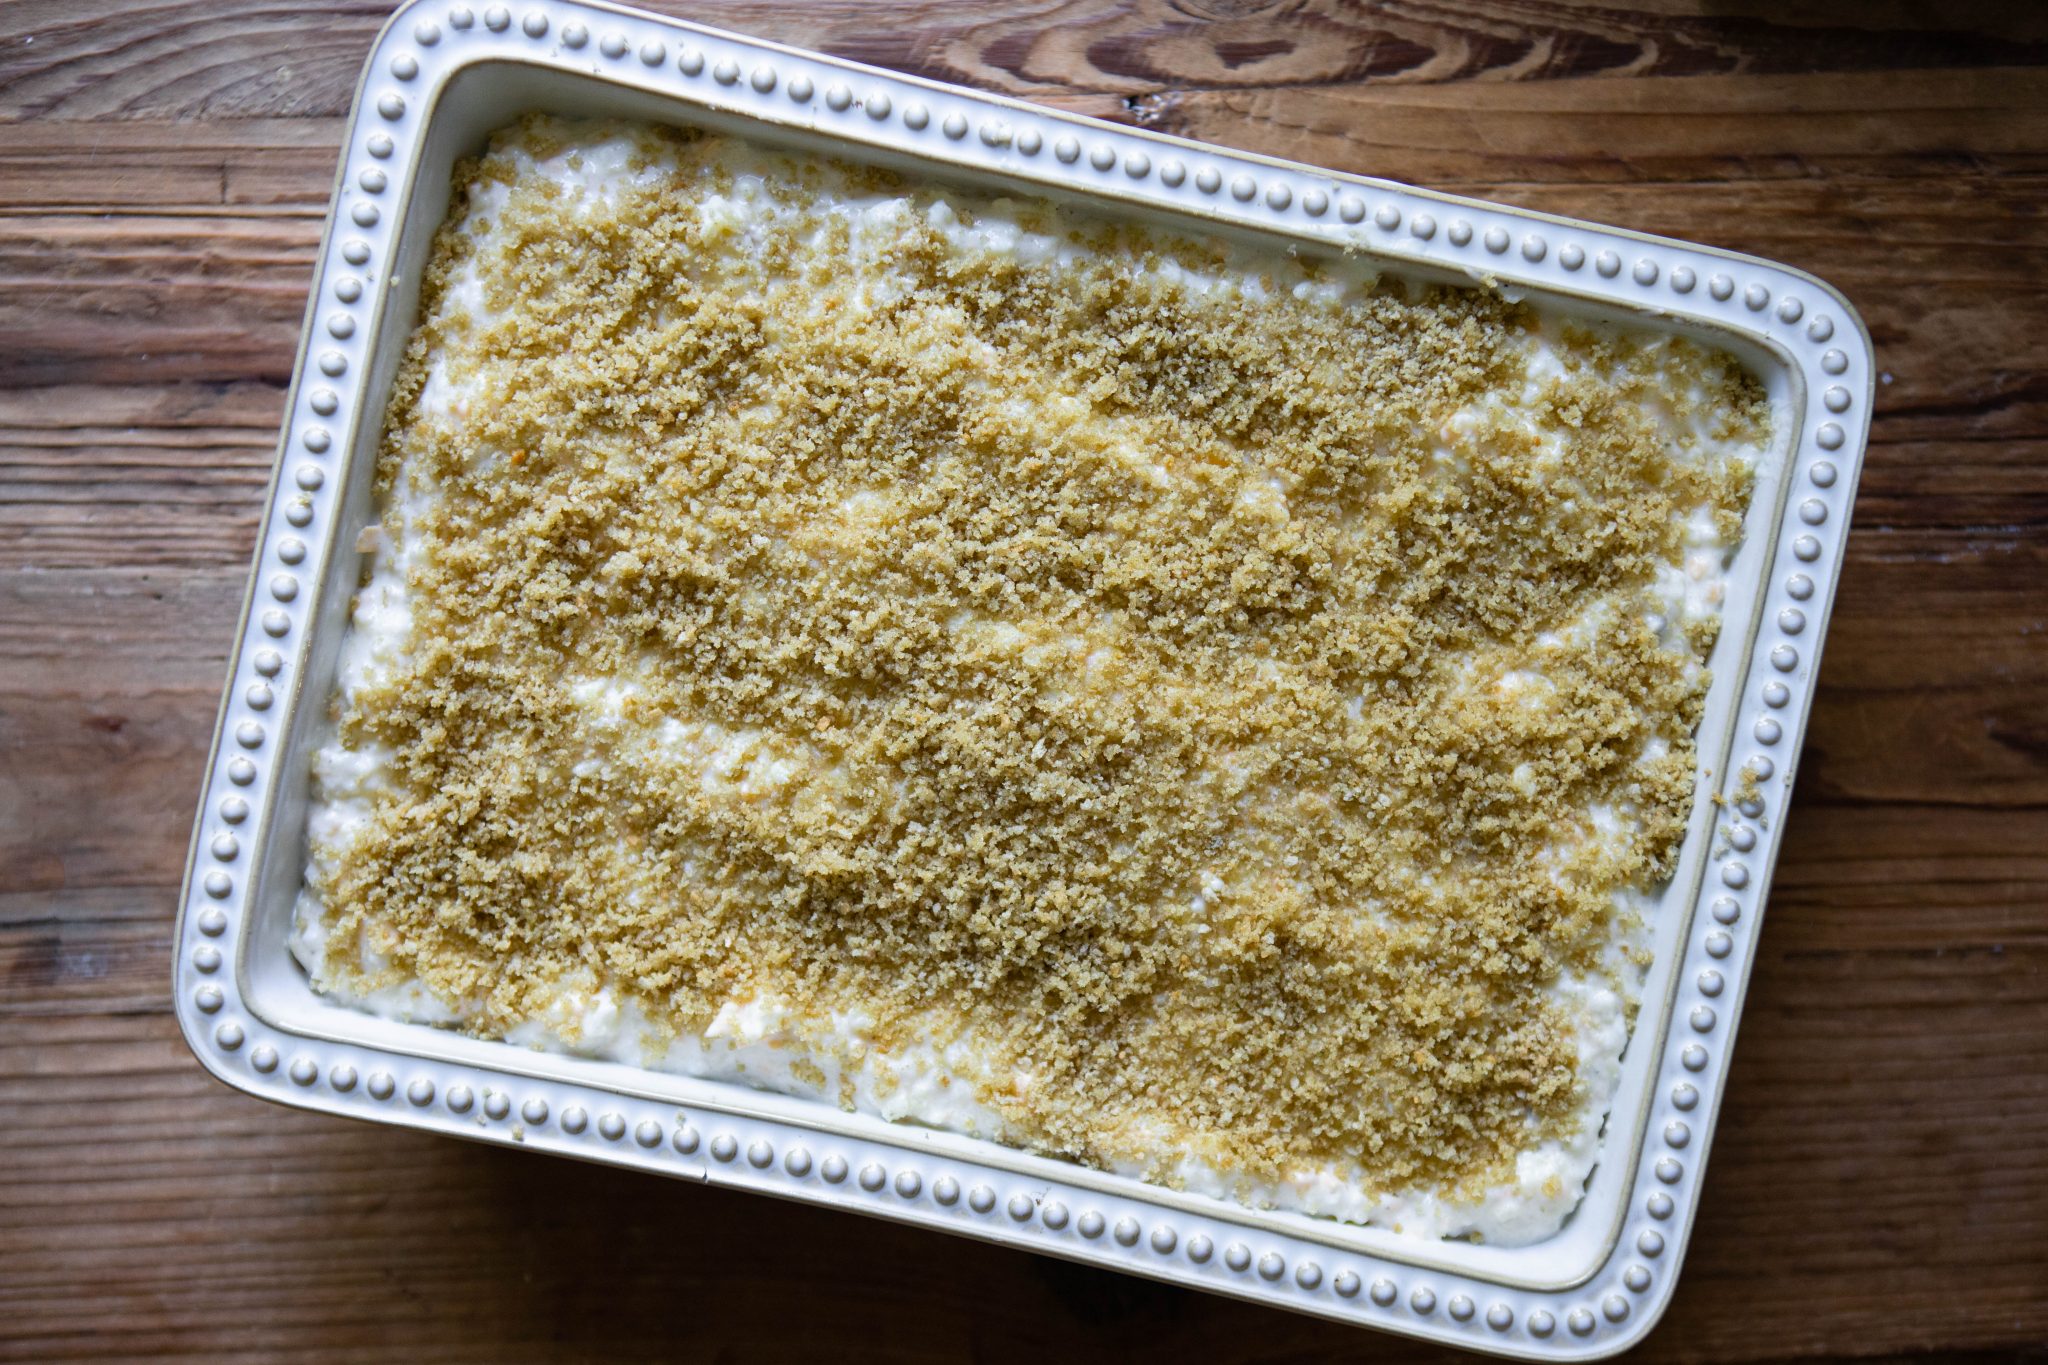 uncooked cheesy potato casserole in a casserole dish ready to go in the oven